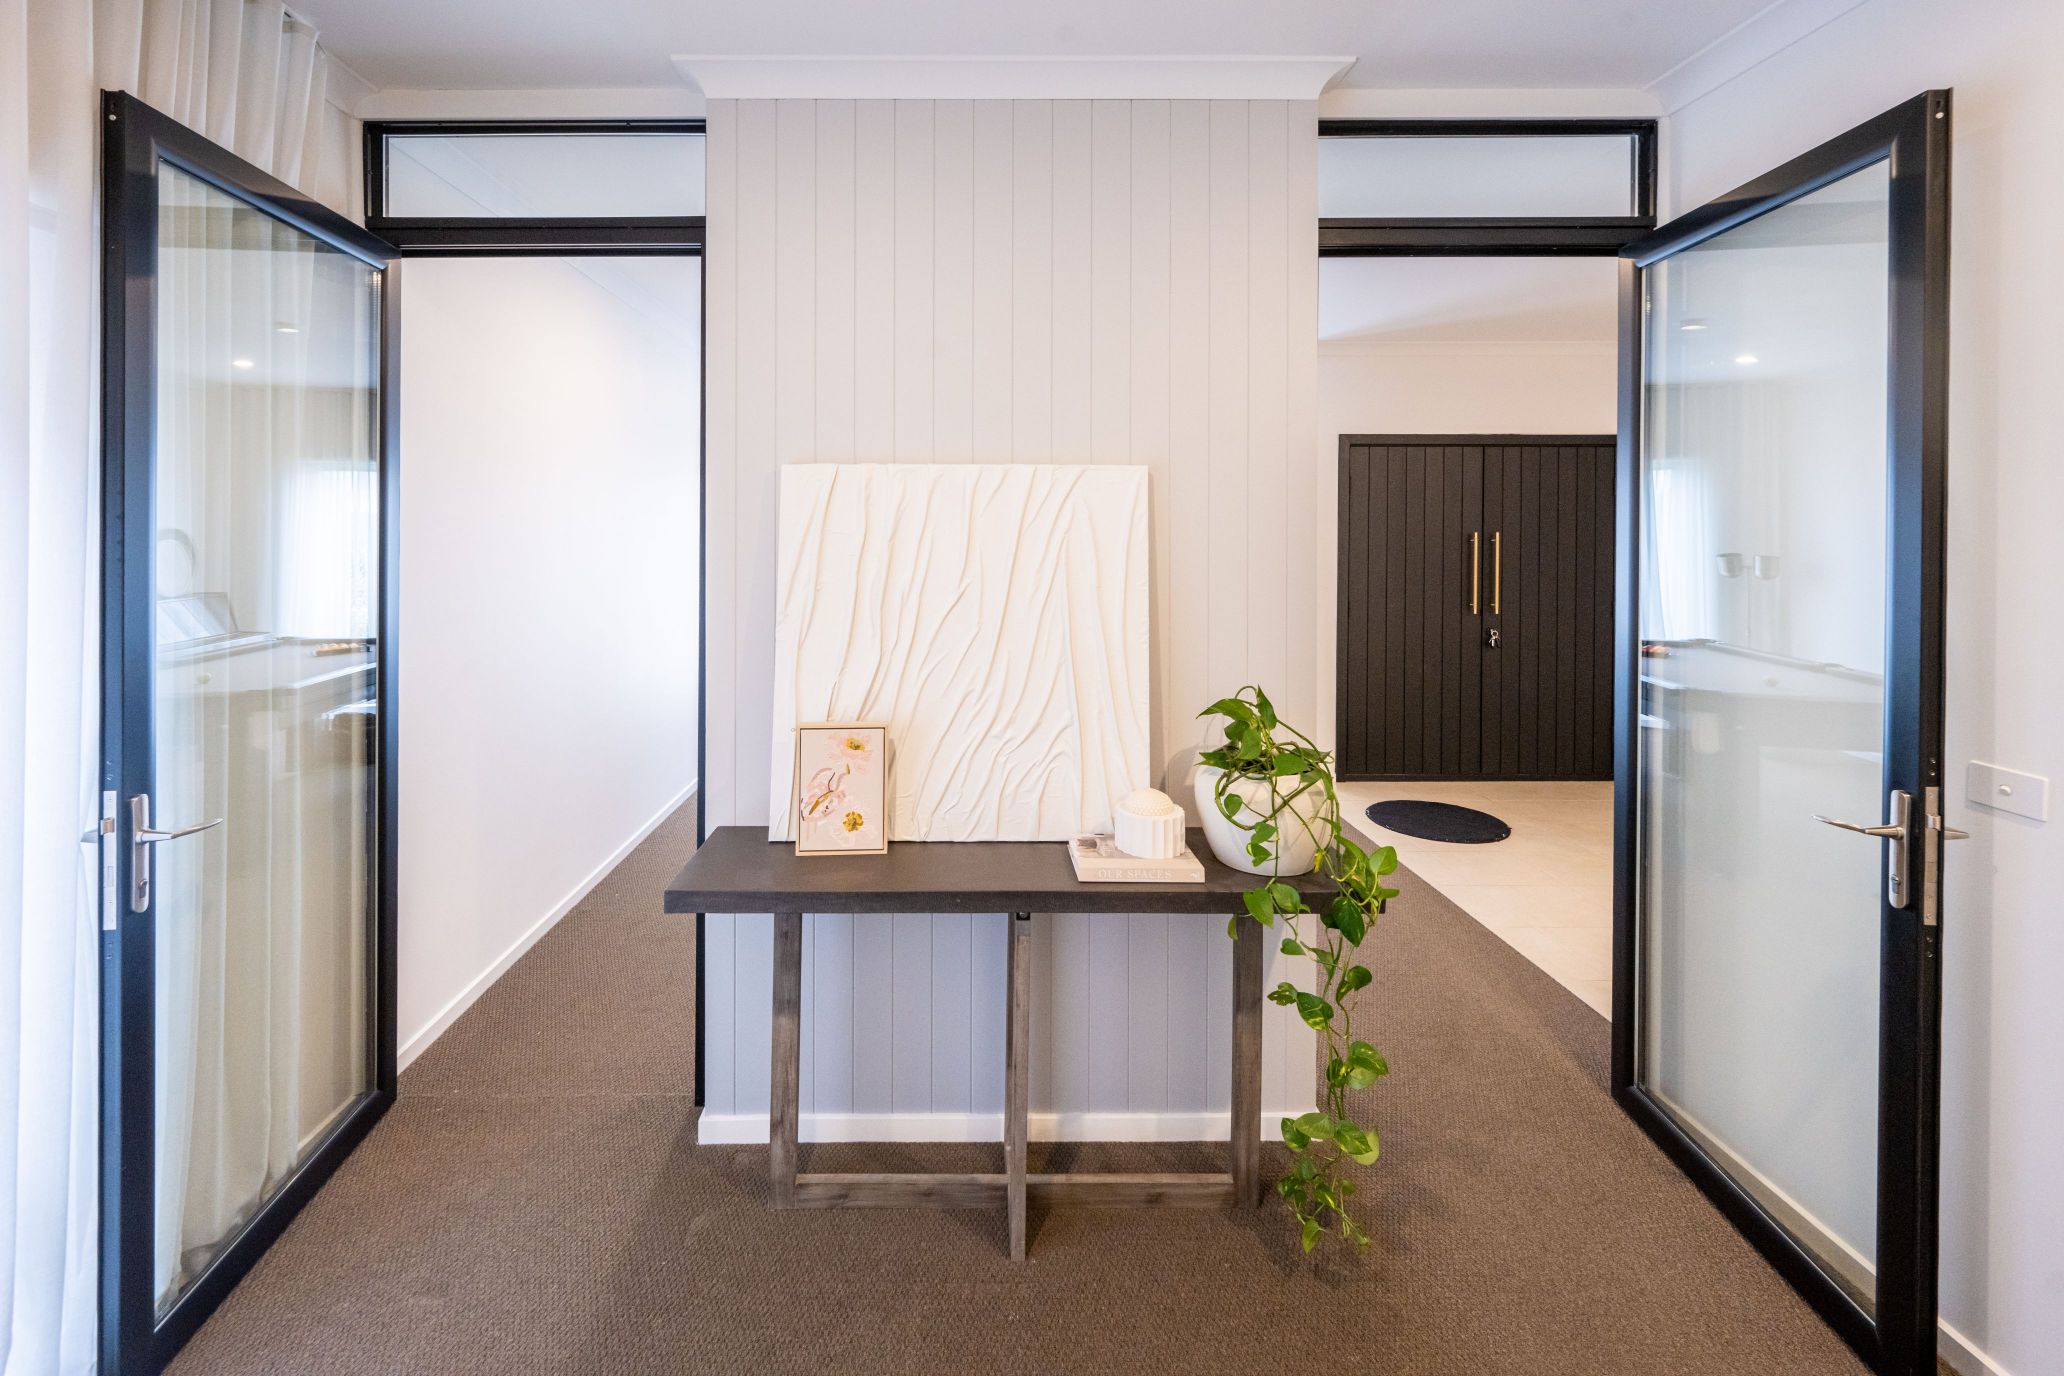 Doors Plus - 2 Aluminium Zone Living Hinged Doors Installed in Home Office